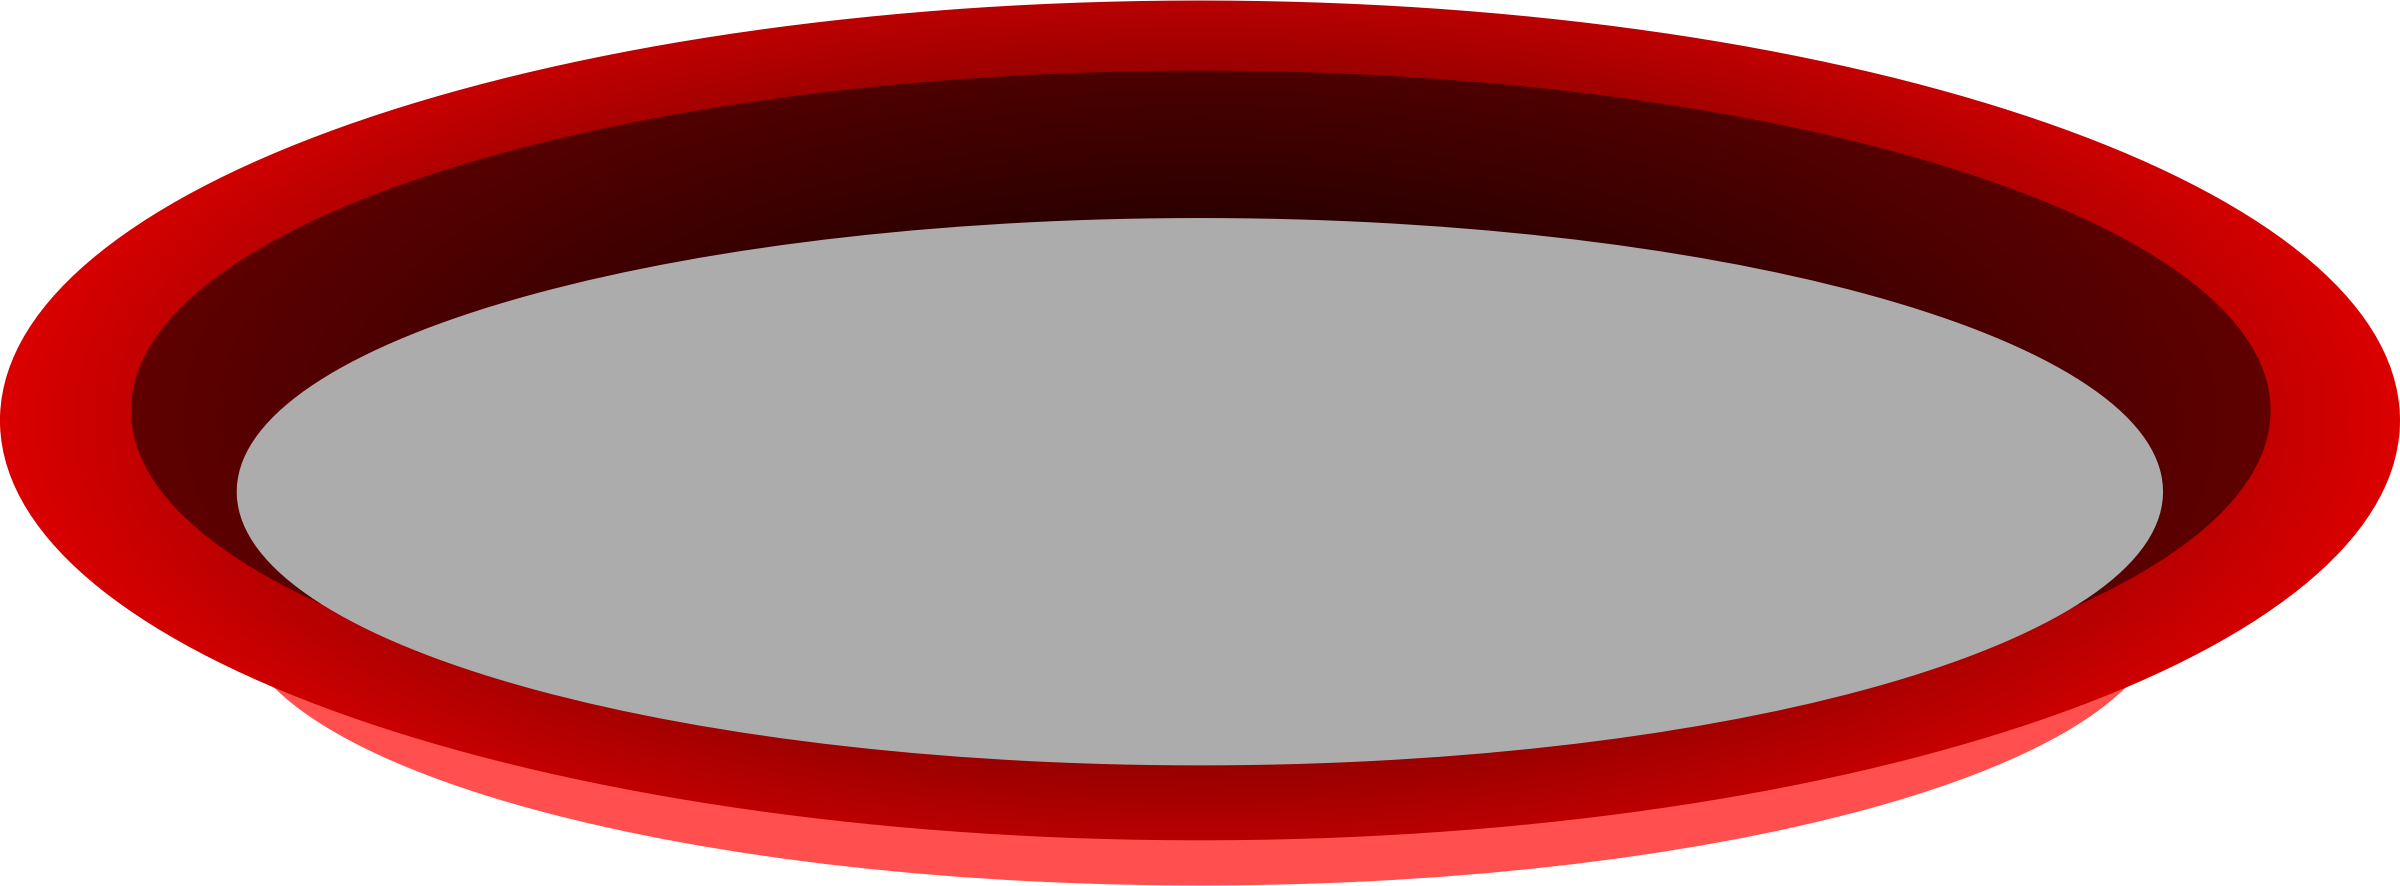 oval clipart tray